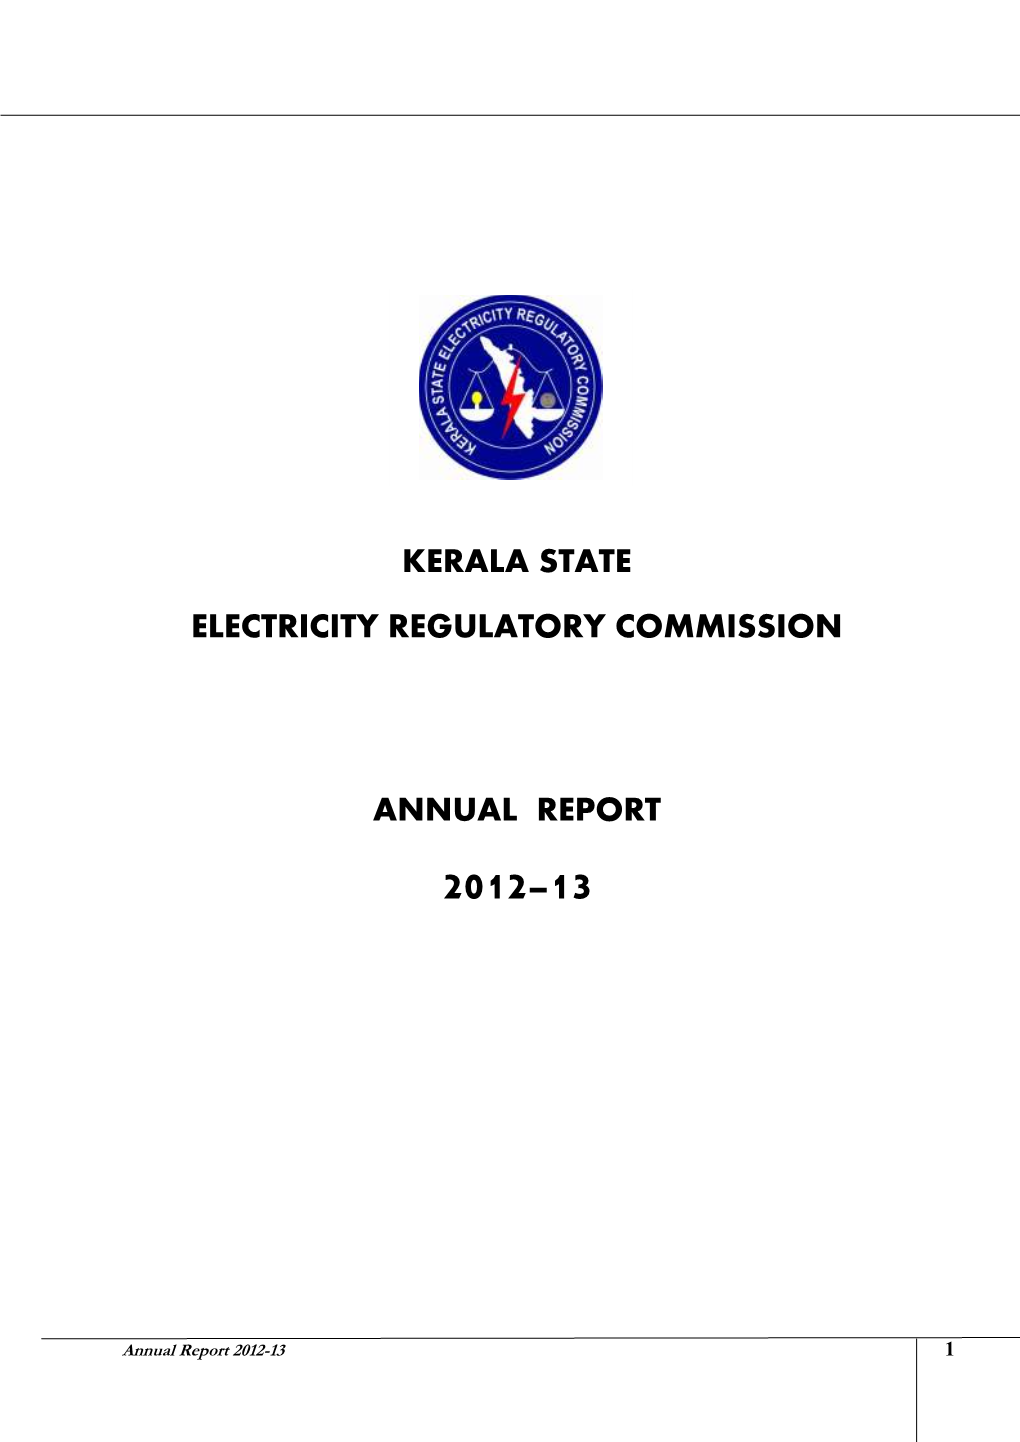 Annual Report -2012-13